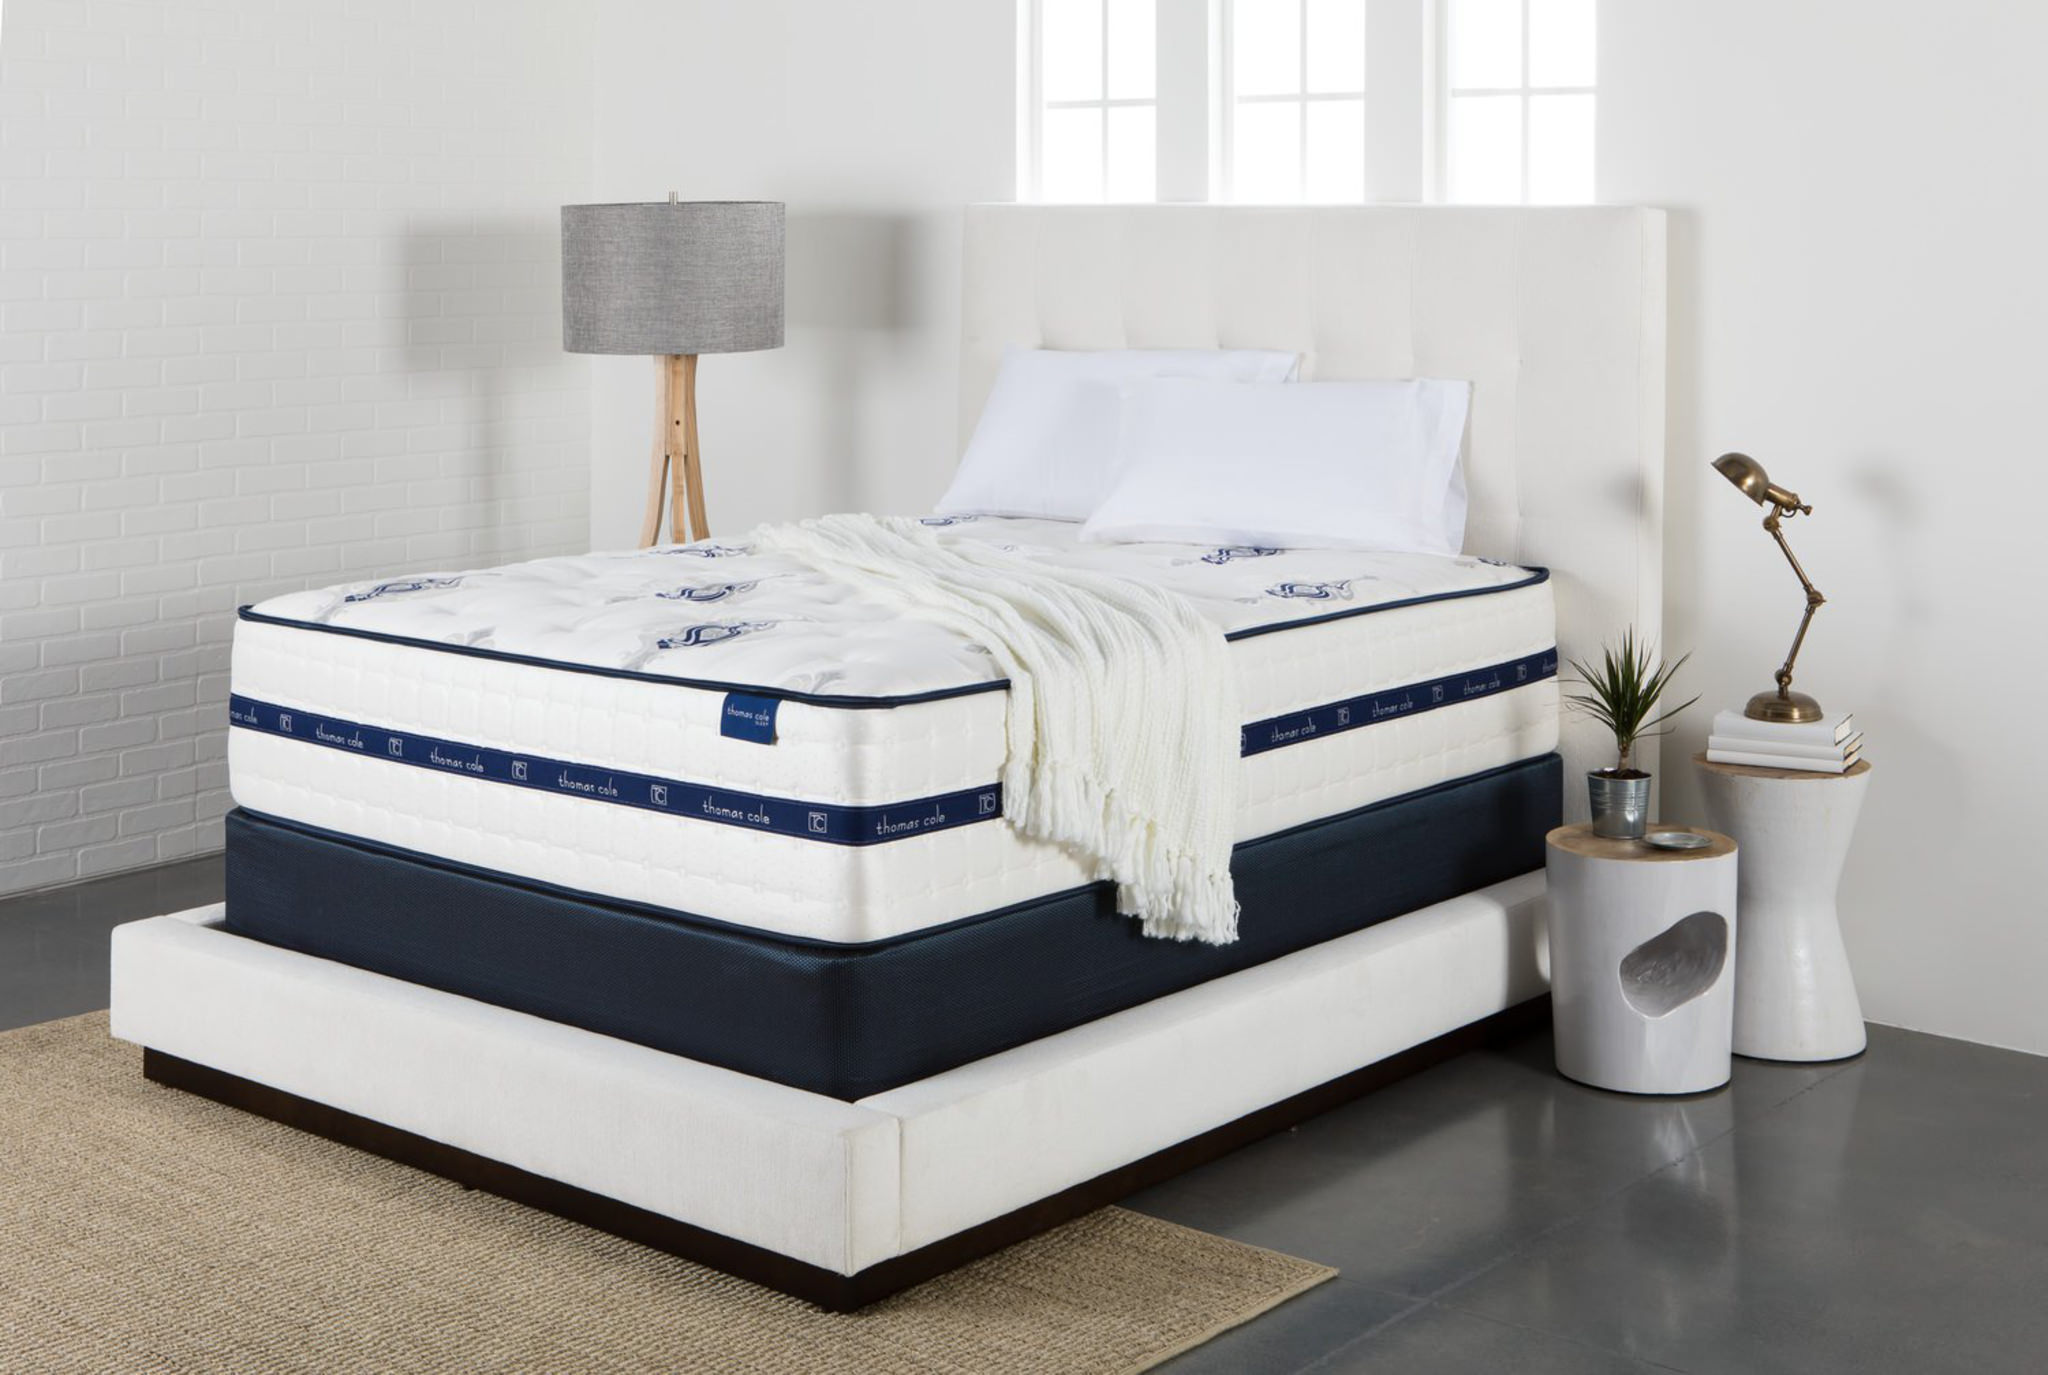 mattress designs with price